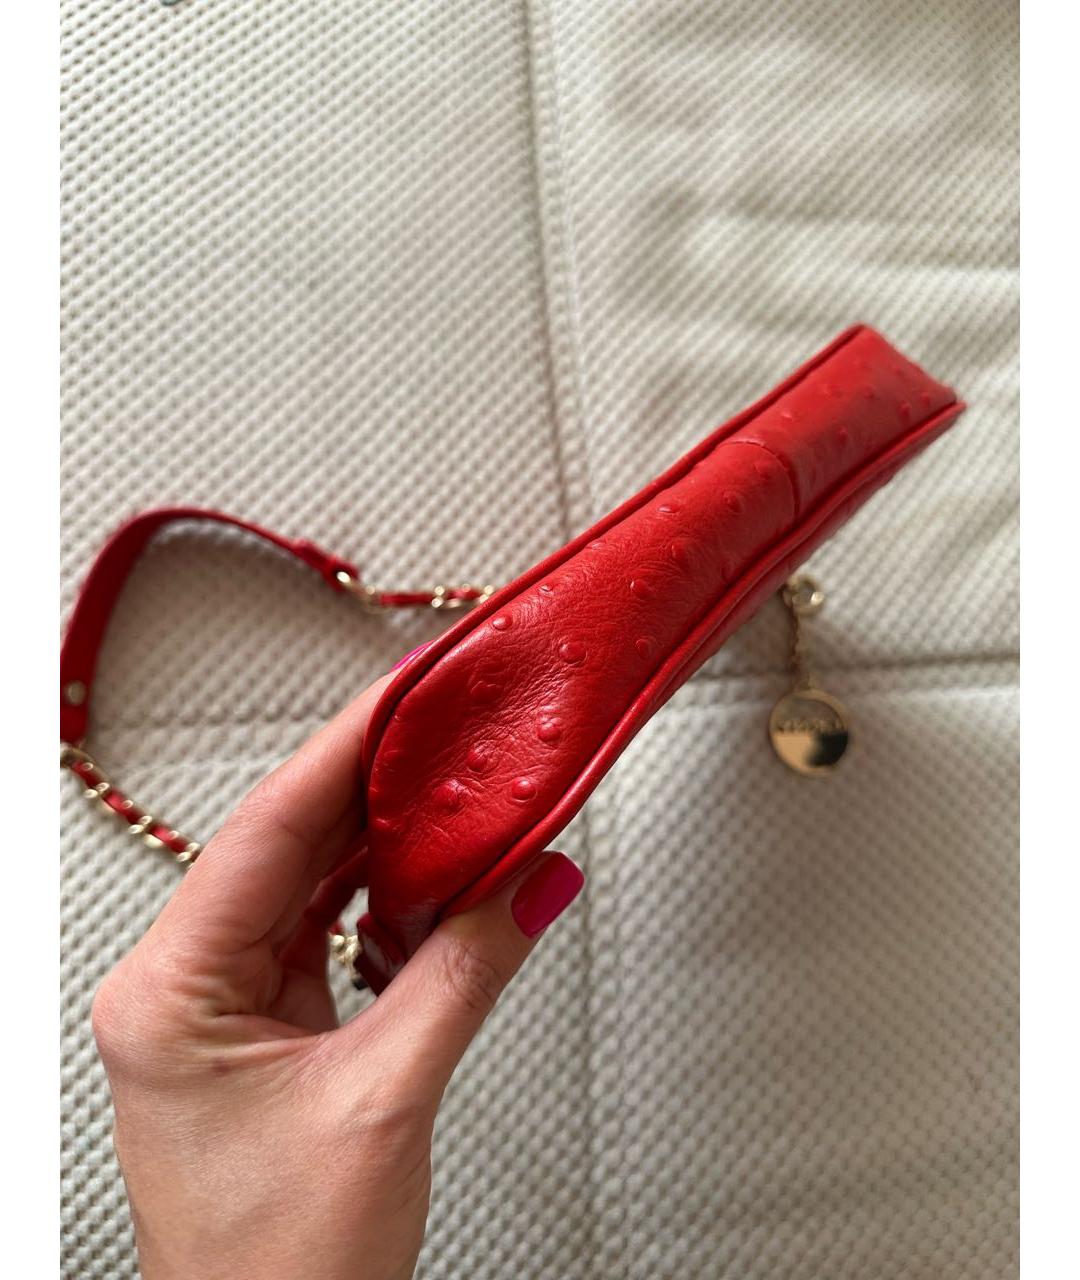 DKNY Красная кожаная сумка через плечо, фото 5